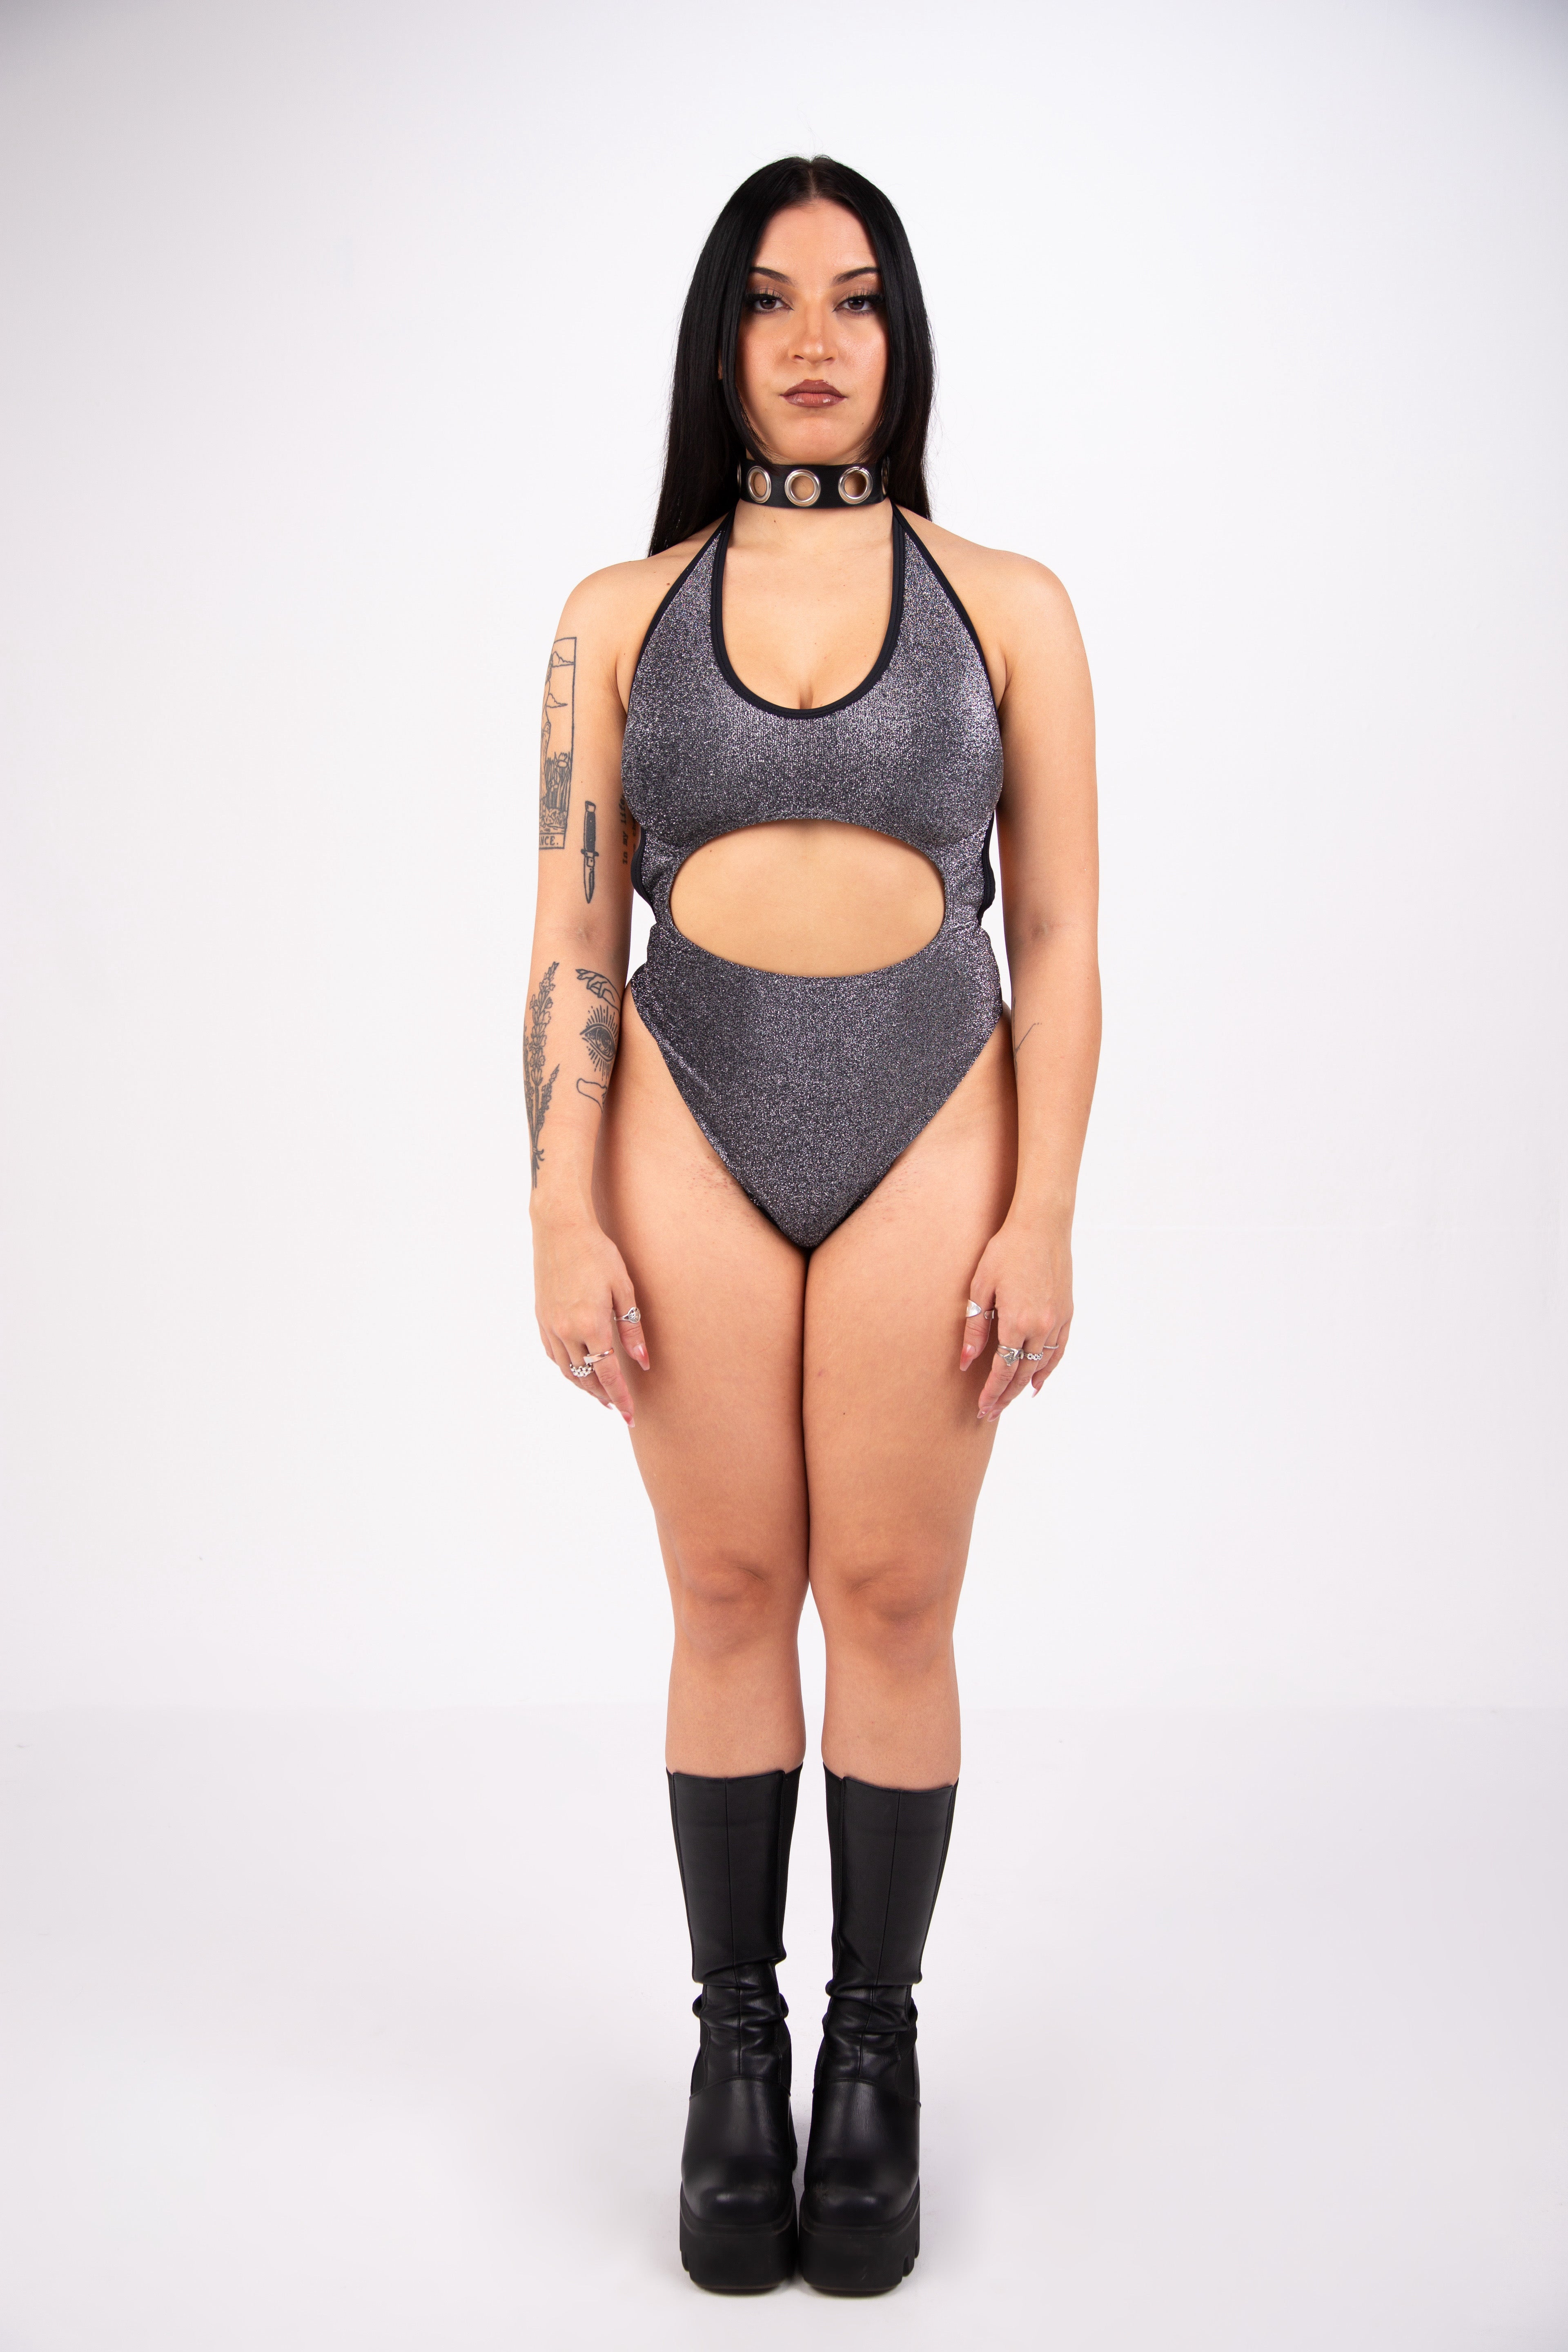 La Tortura Bodysuit - Glitter Diva Bodysuit Mi Gente Clothing   